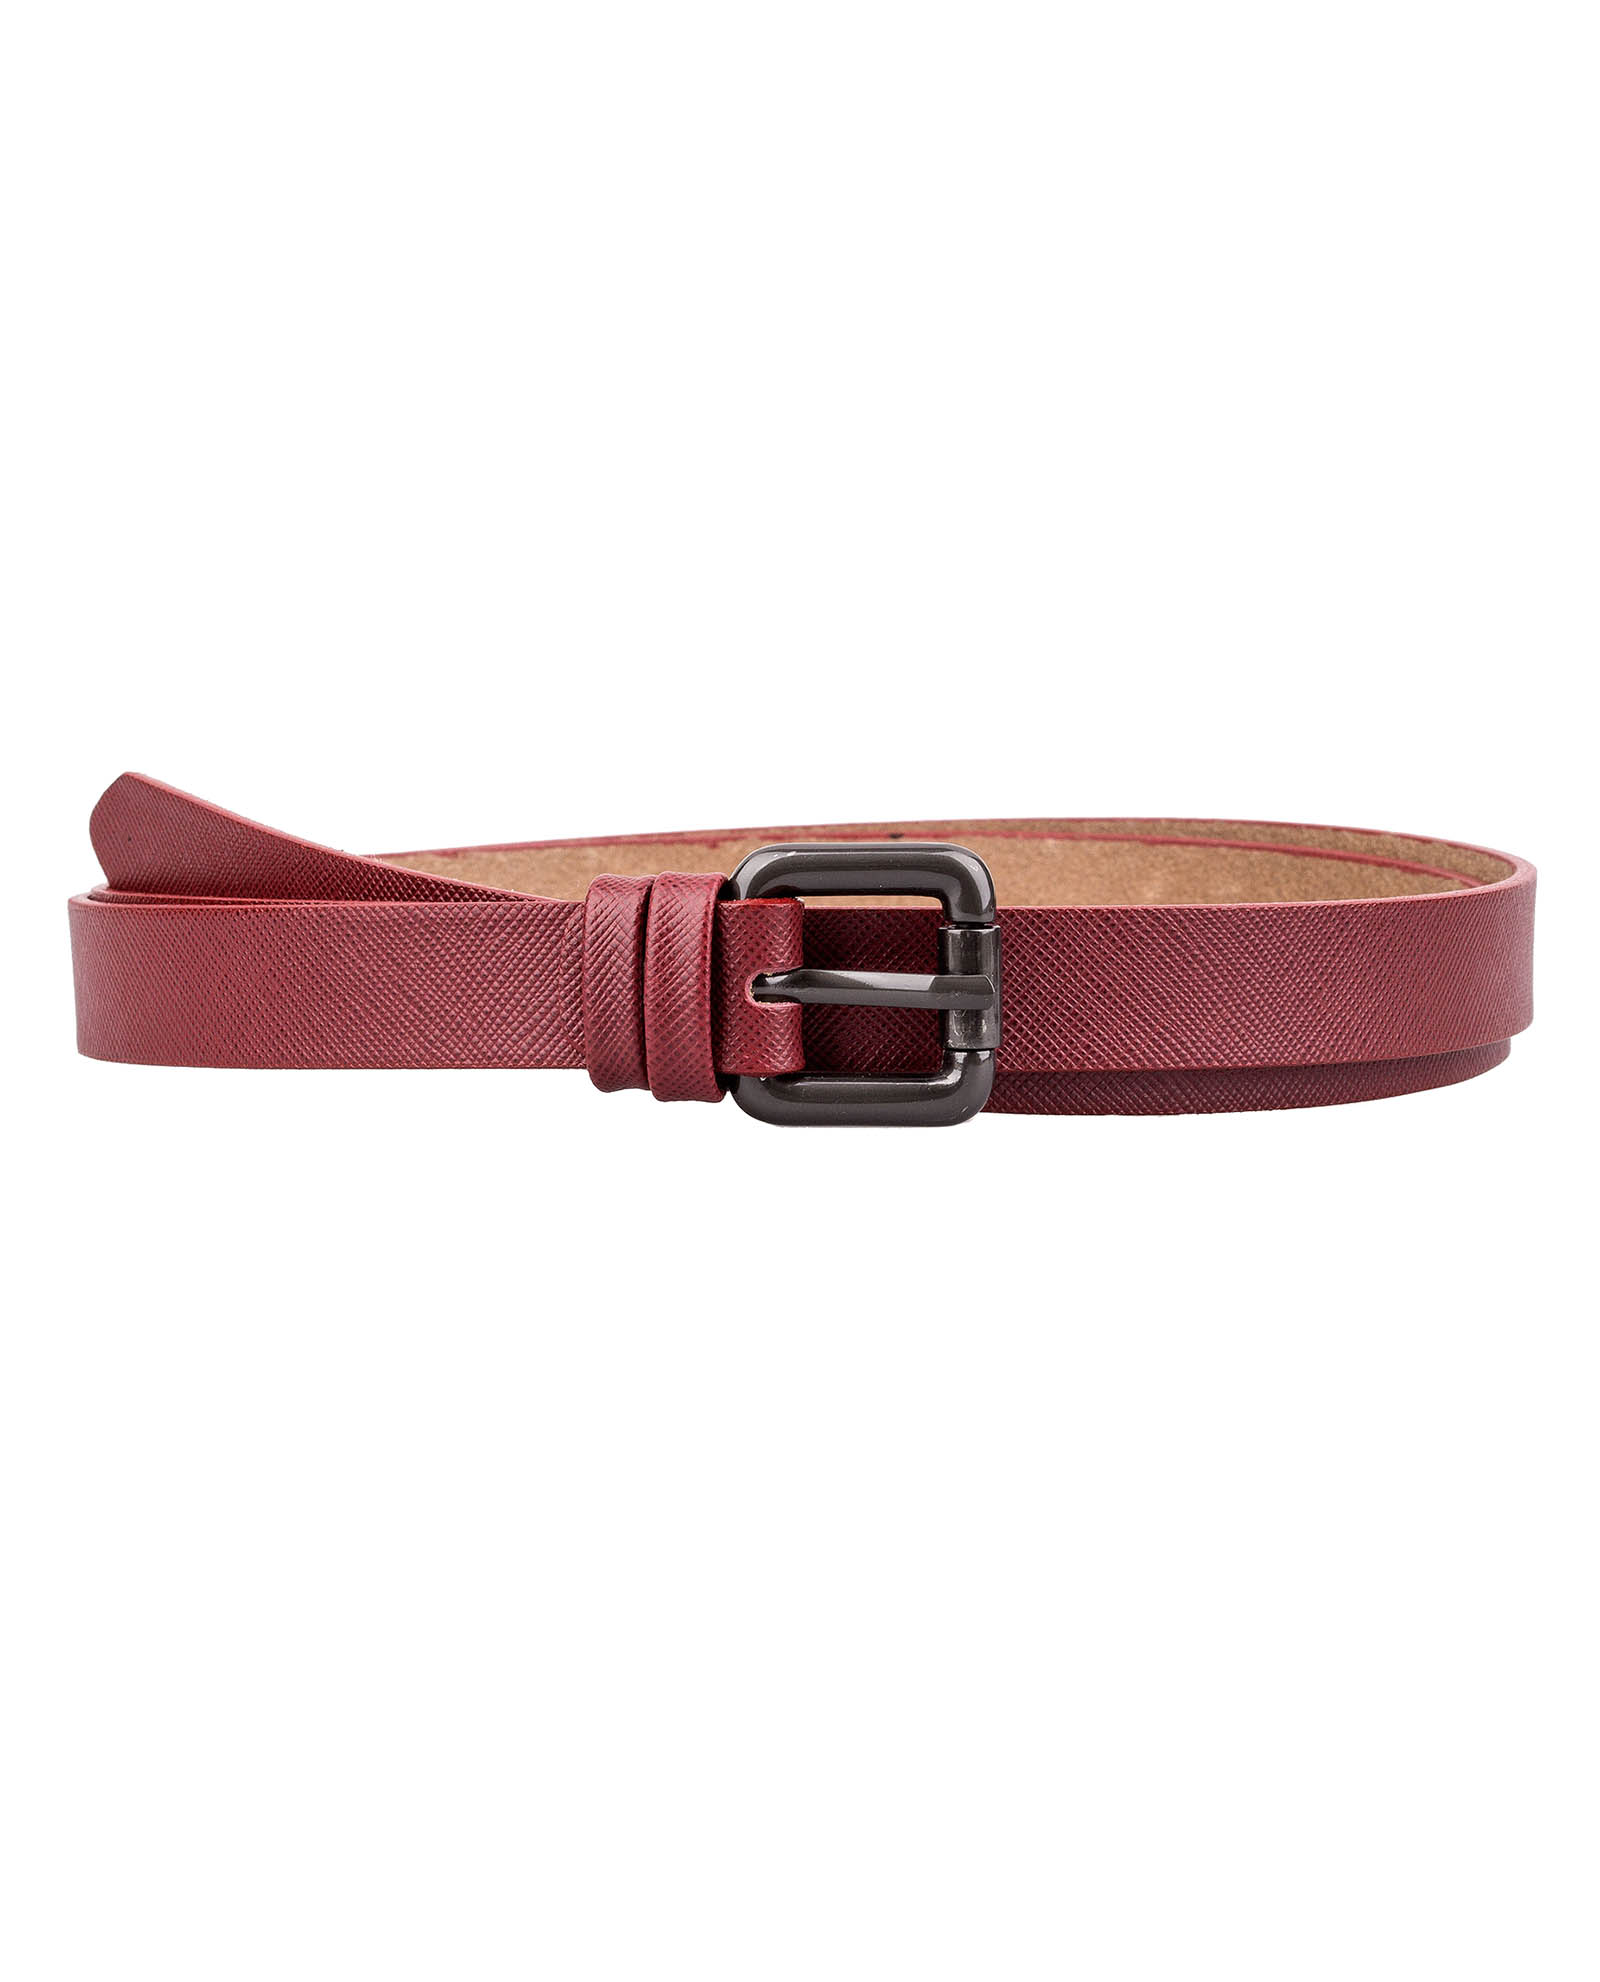 Buy Women's Burgundy Leather Belt | LeatherBeltsOnline.com | Free Ship